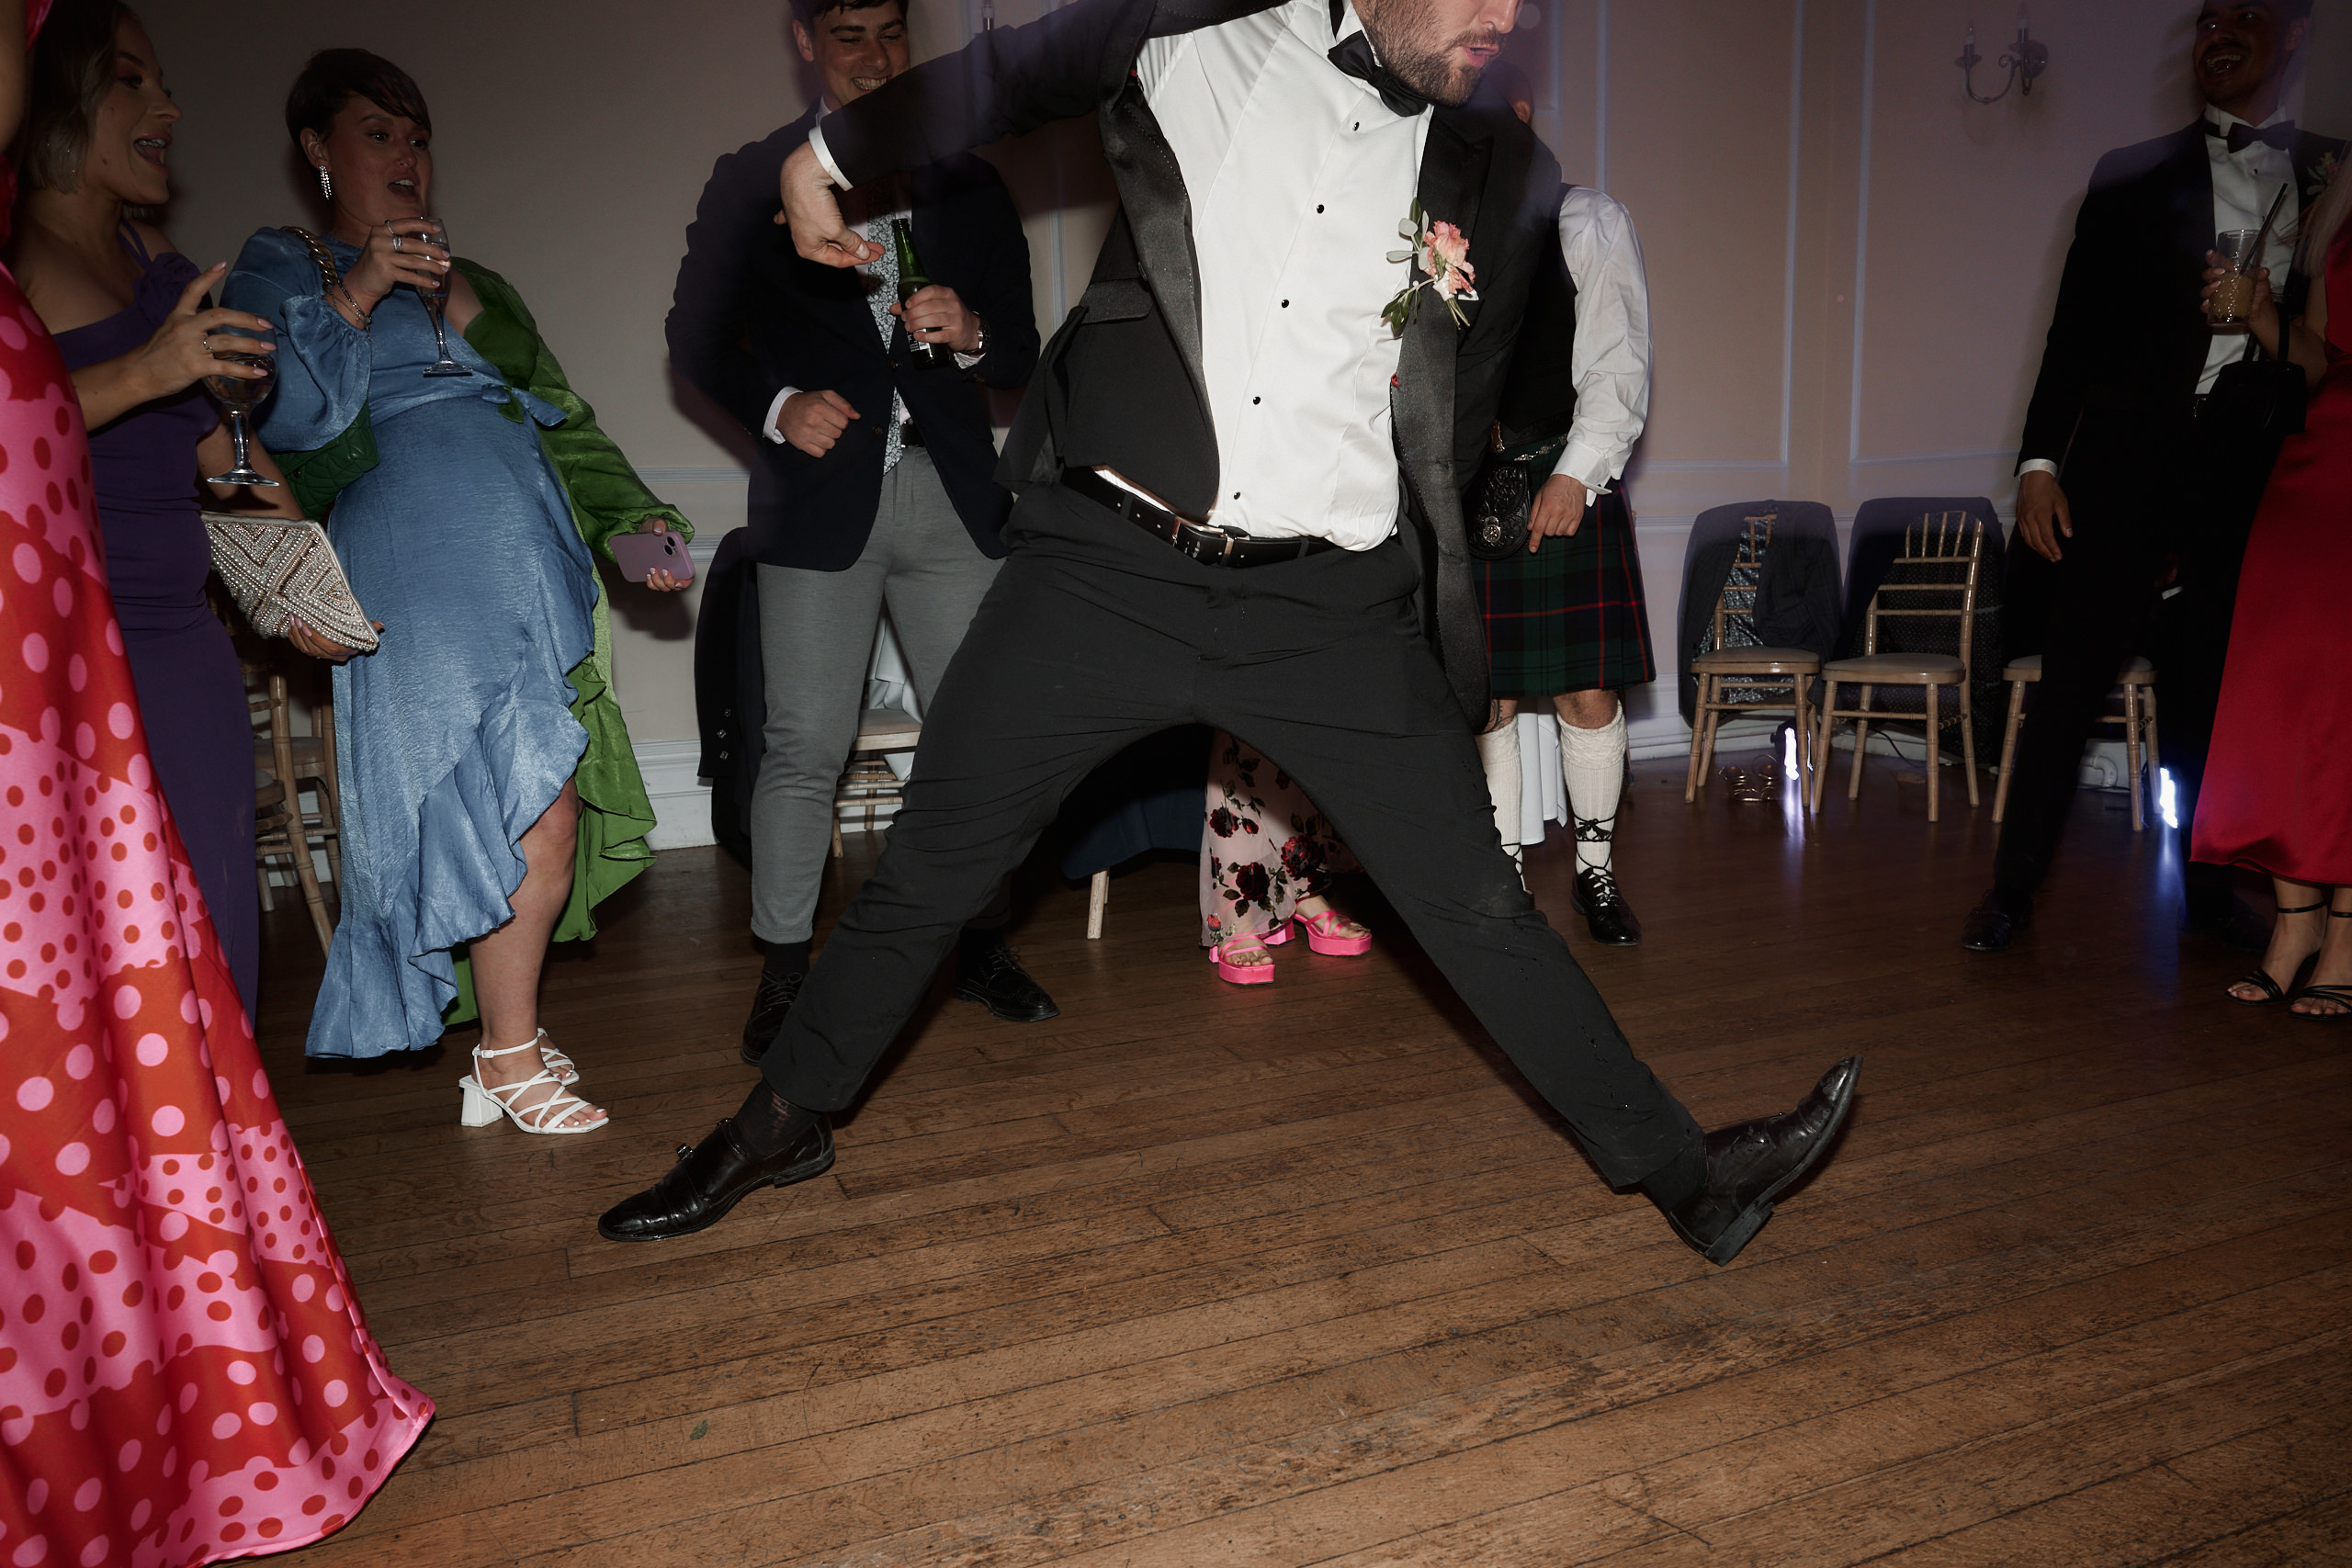 A man in a tuxedo dancing at a wedding.